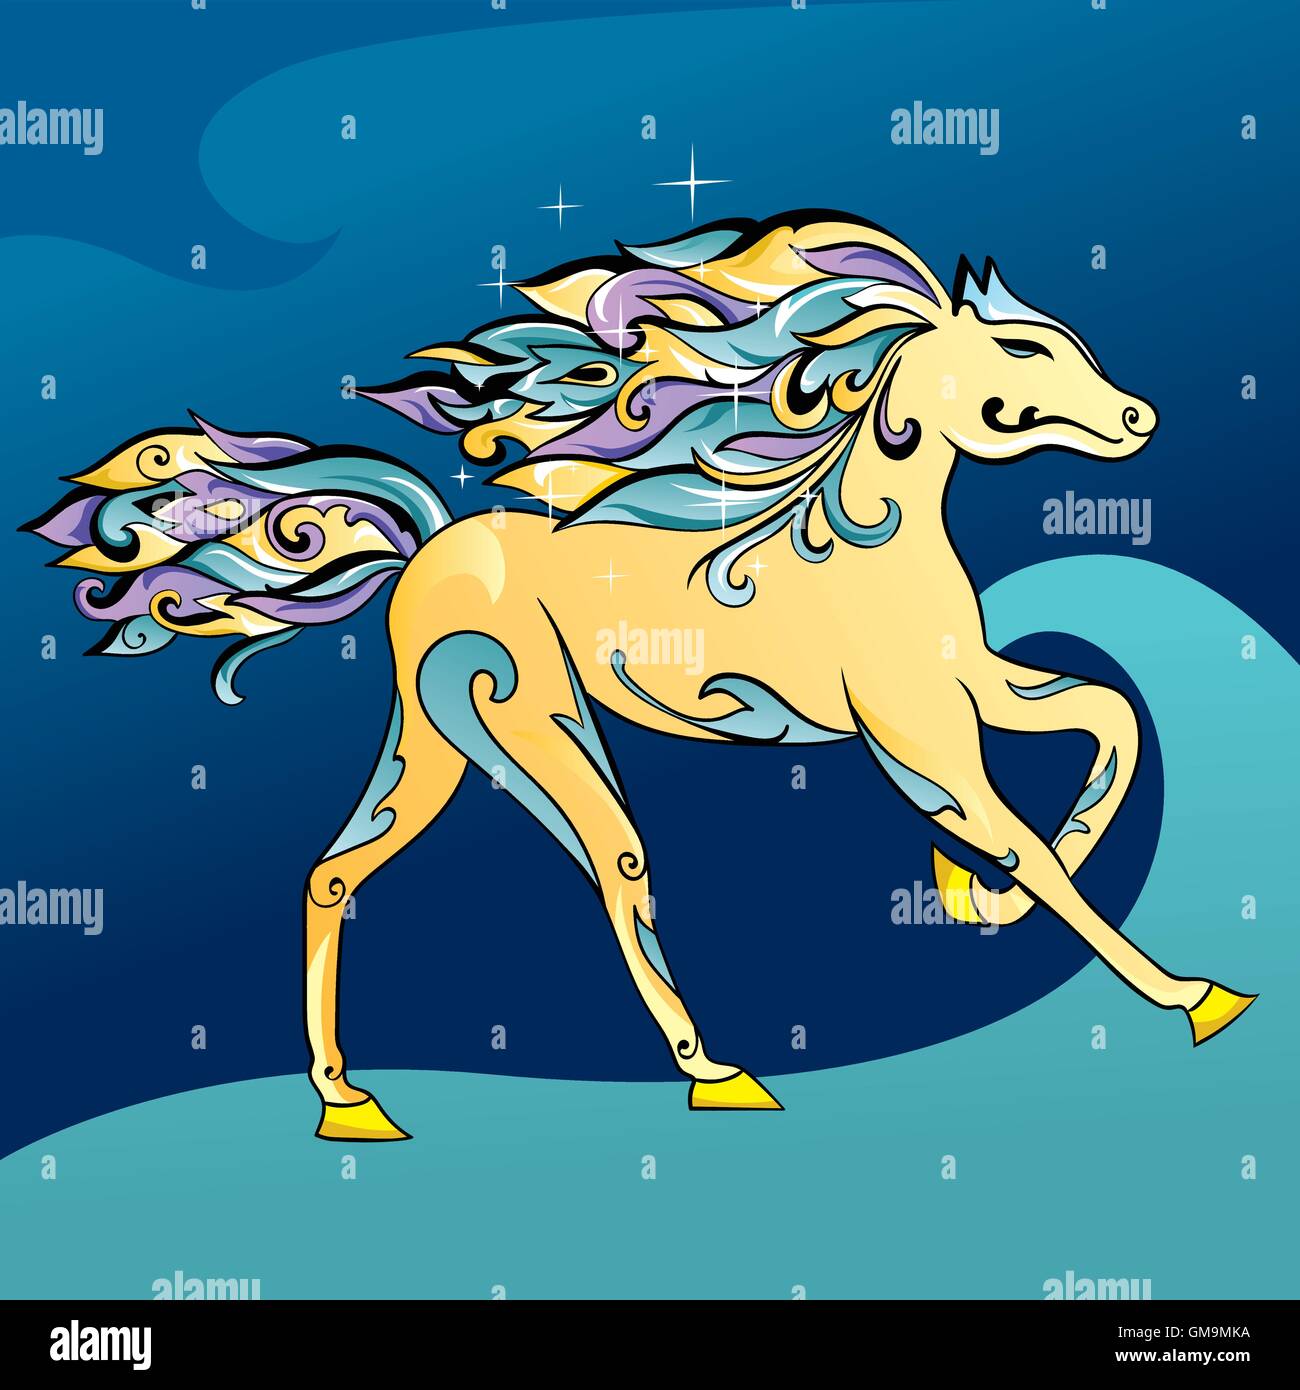 Arabic Horse Vector Illustration Stock Vector